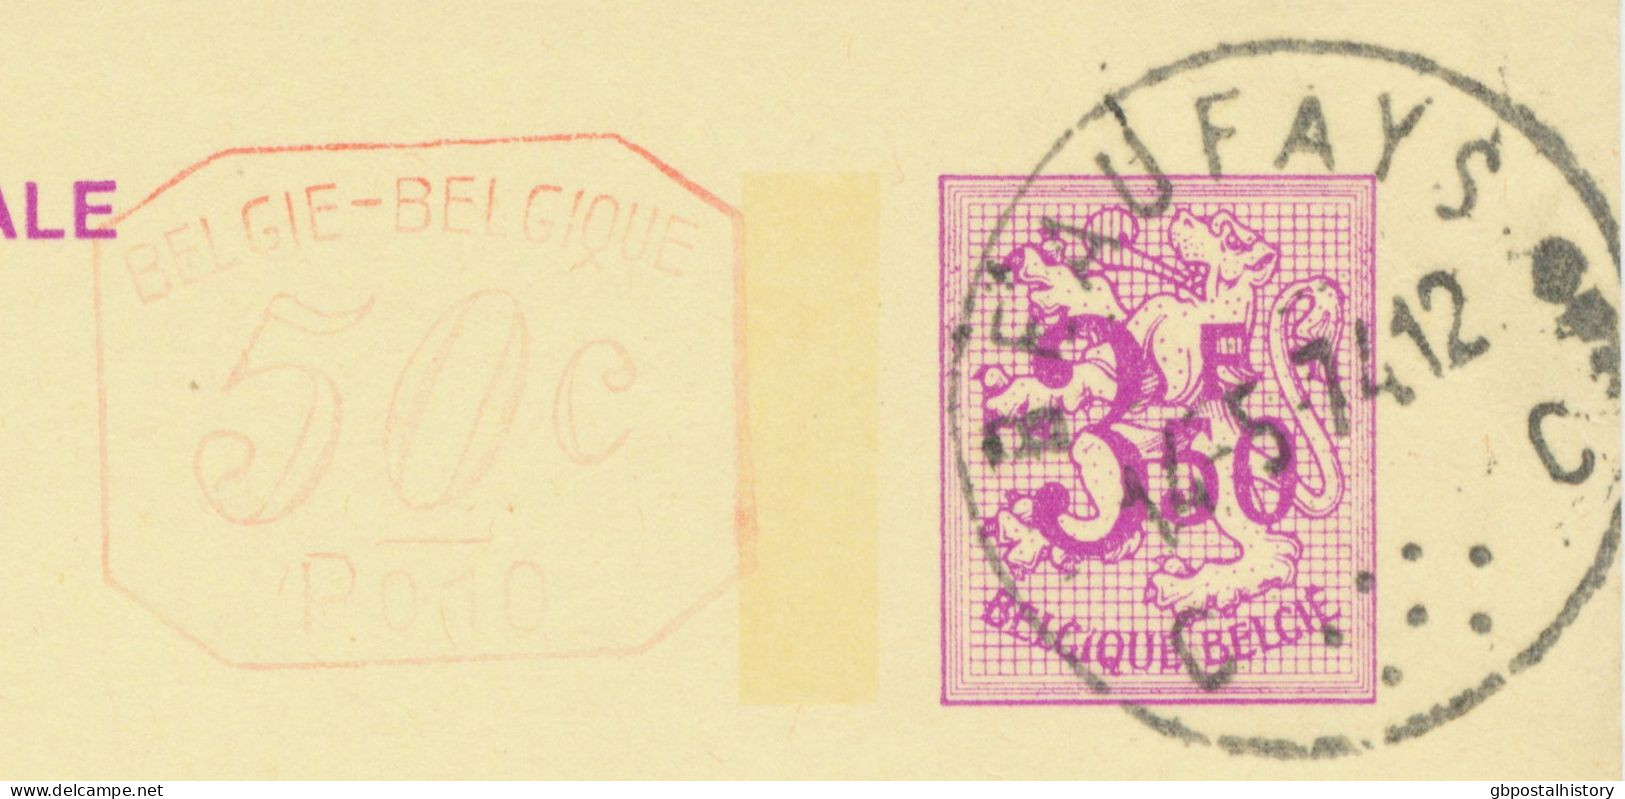 BELGIUM VILLAGE POSTMARKS  BEAUFAYS C (now Chaudfontaine) SC With Dots 1974 (Postal Stationery 3,50 + 0,50 F, PUBLIBEL 2 - Oblitérations à Points